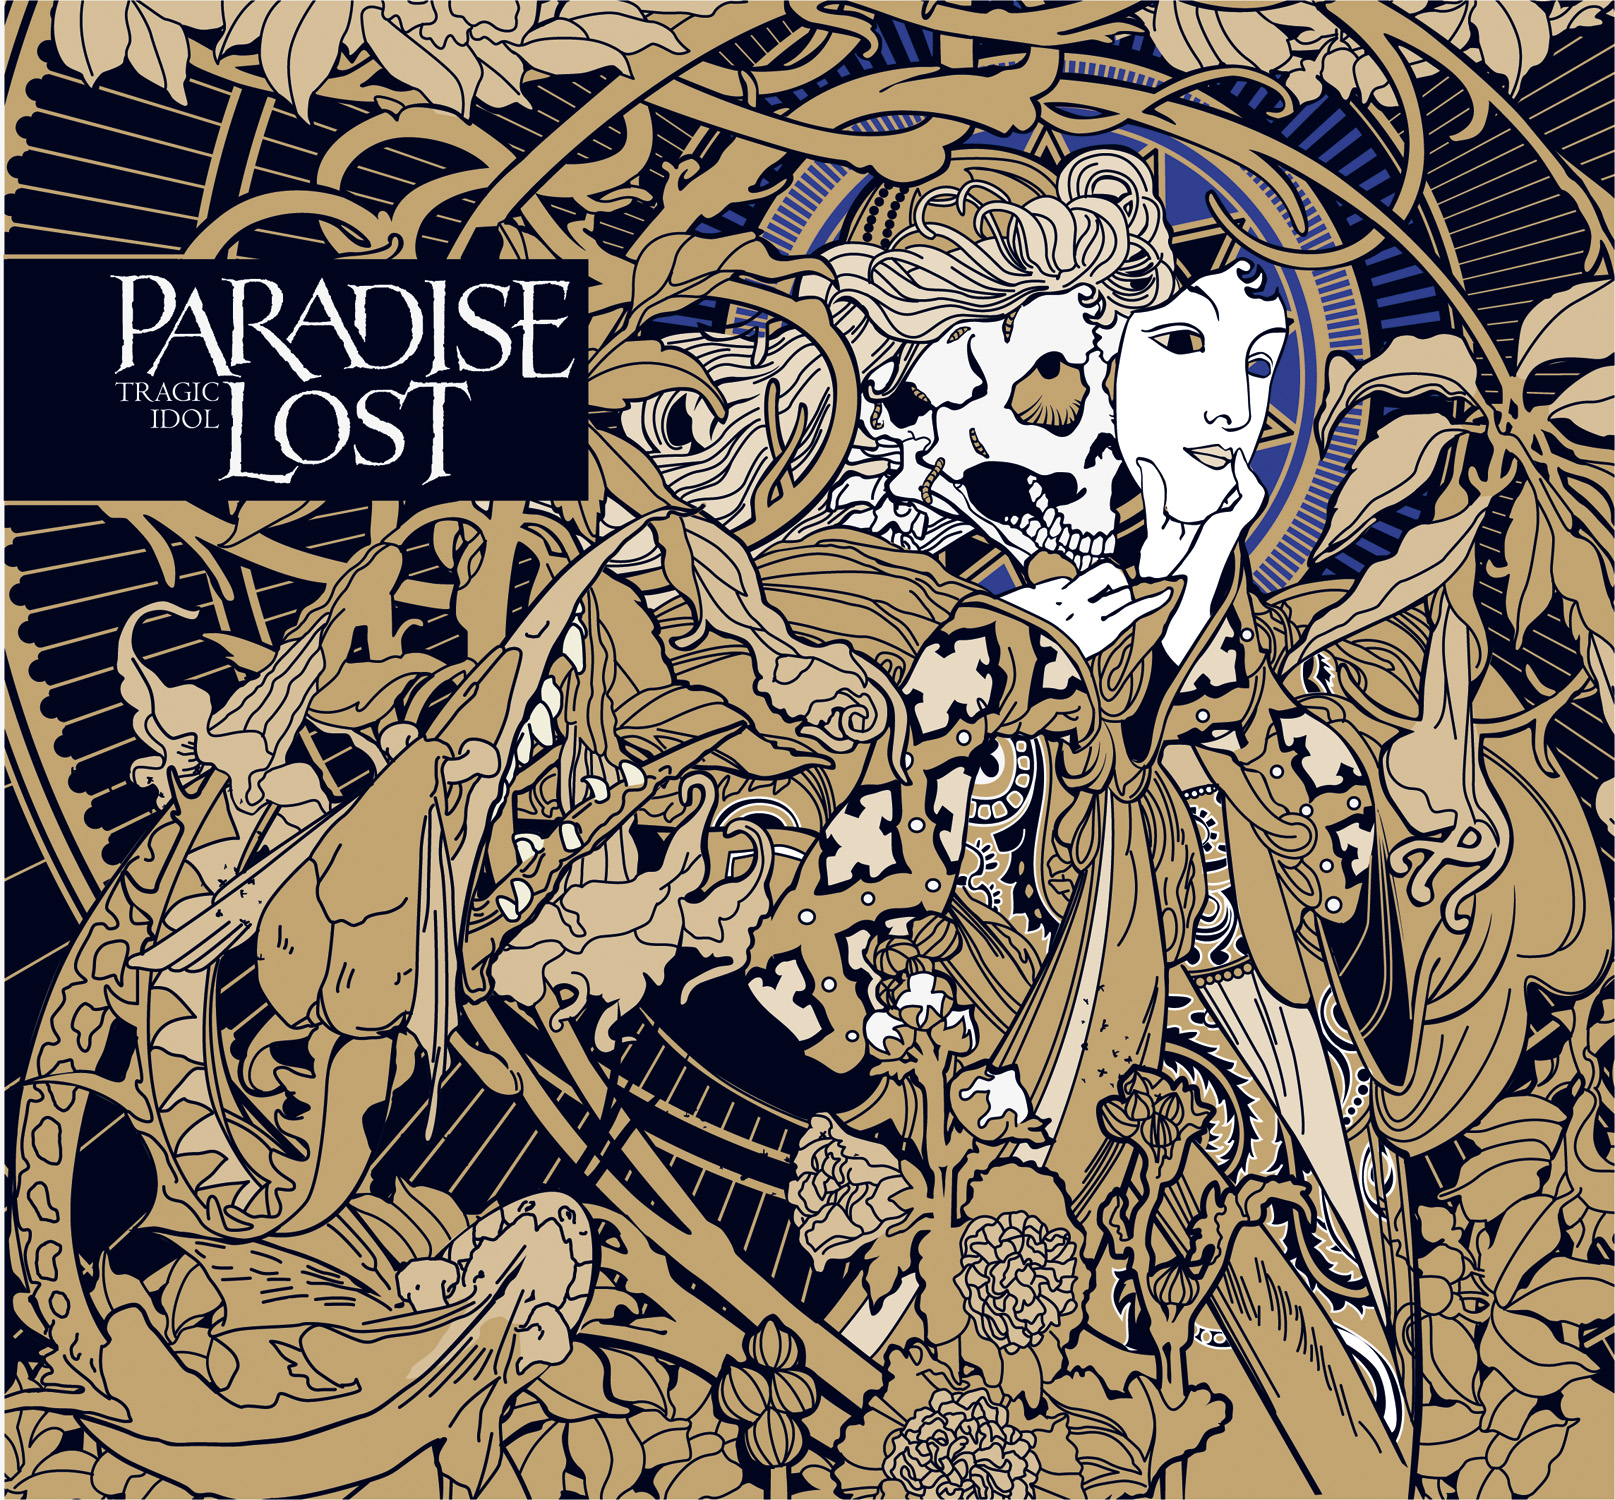 Paradise Lost – Tragic Idol Review